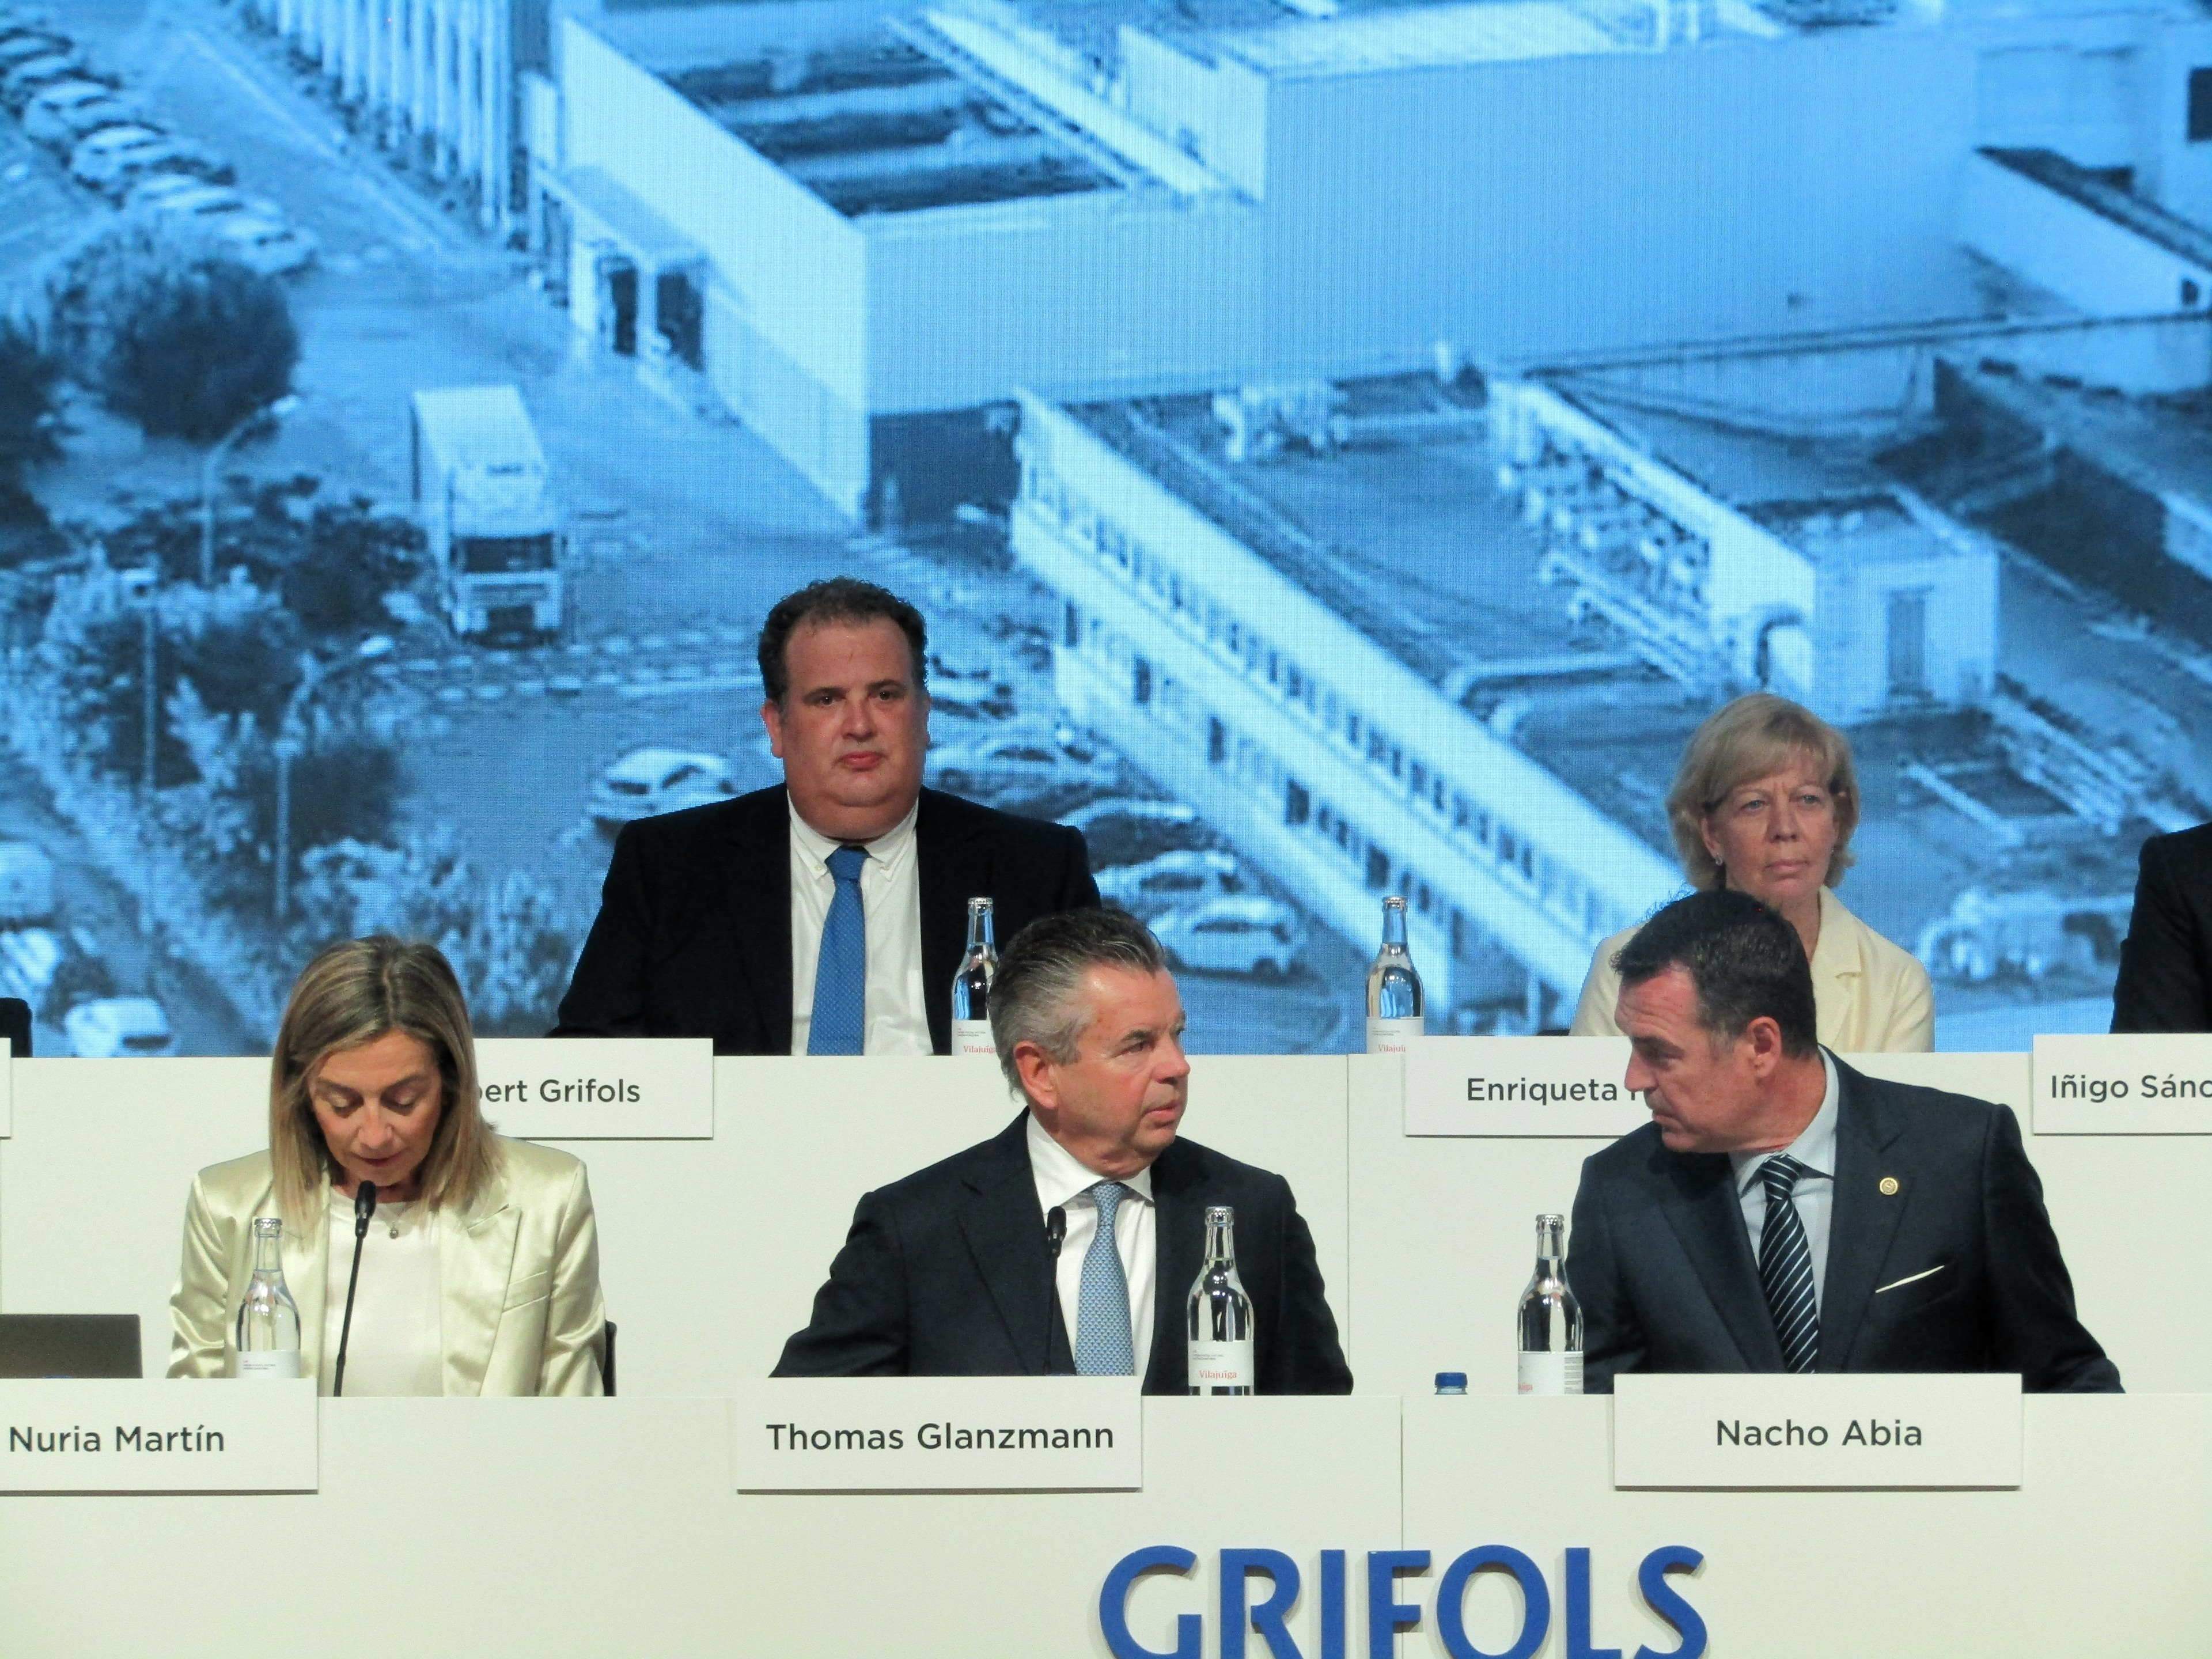 Thomas Glanzmann compra 9.178 accions de Grifols per valor de 81.133 euros